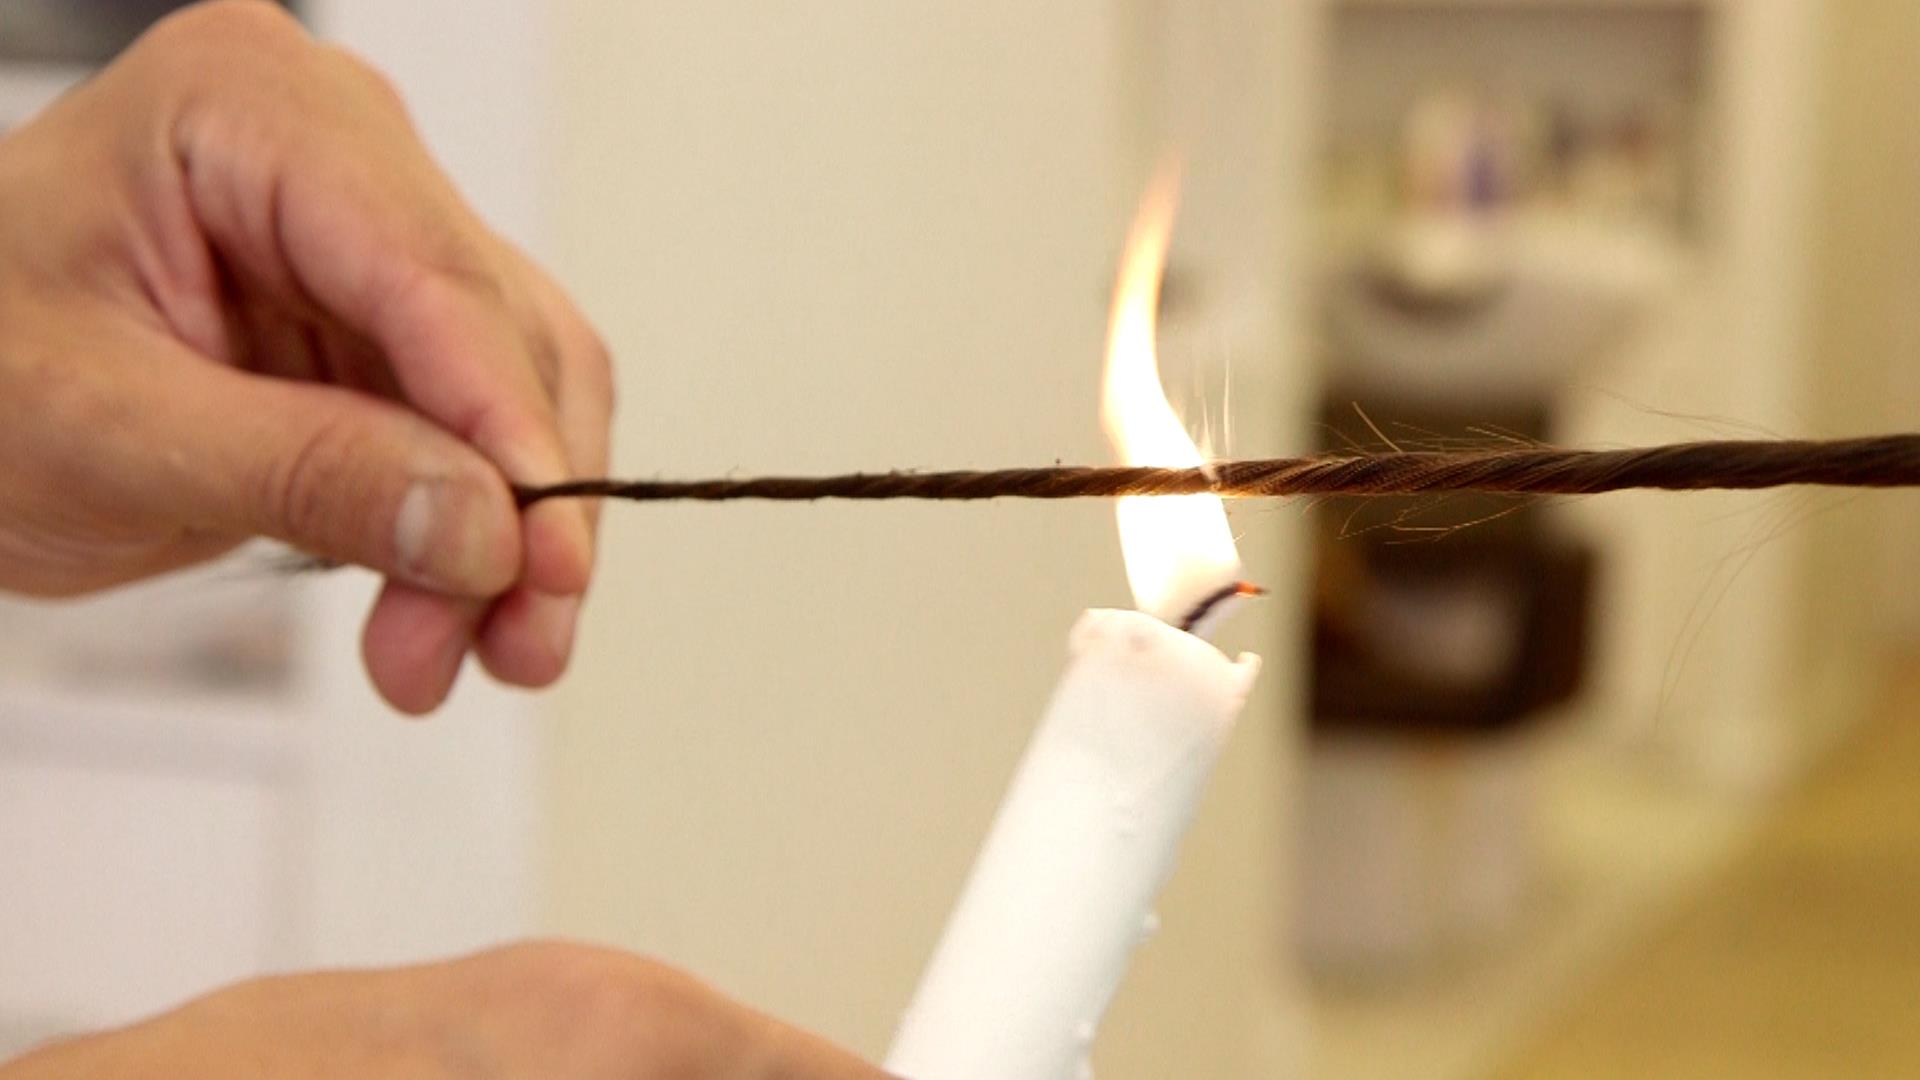 Candle cutting hair treatment: I tried it the Brazilian beauty secret